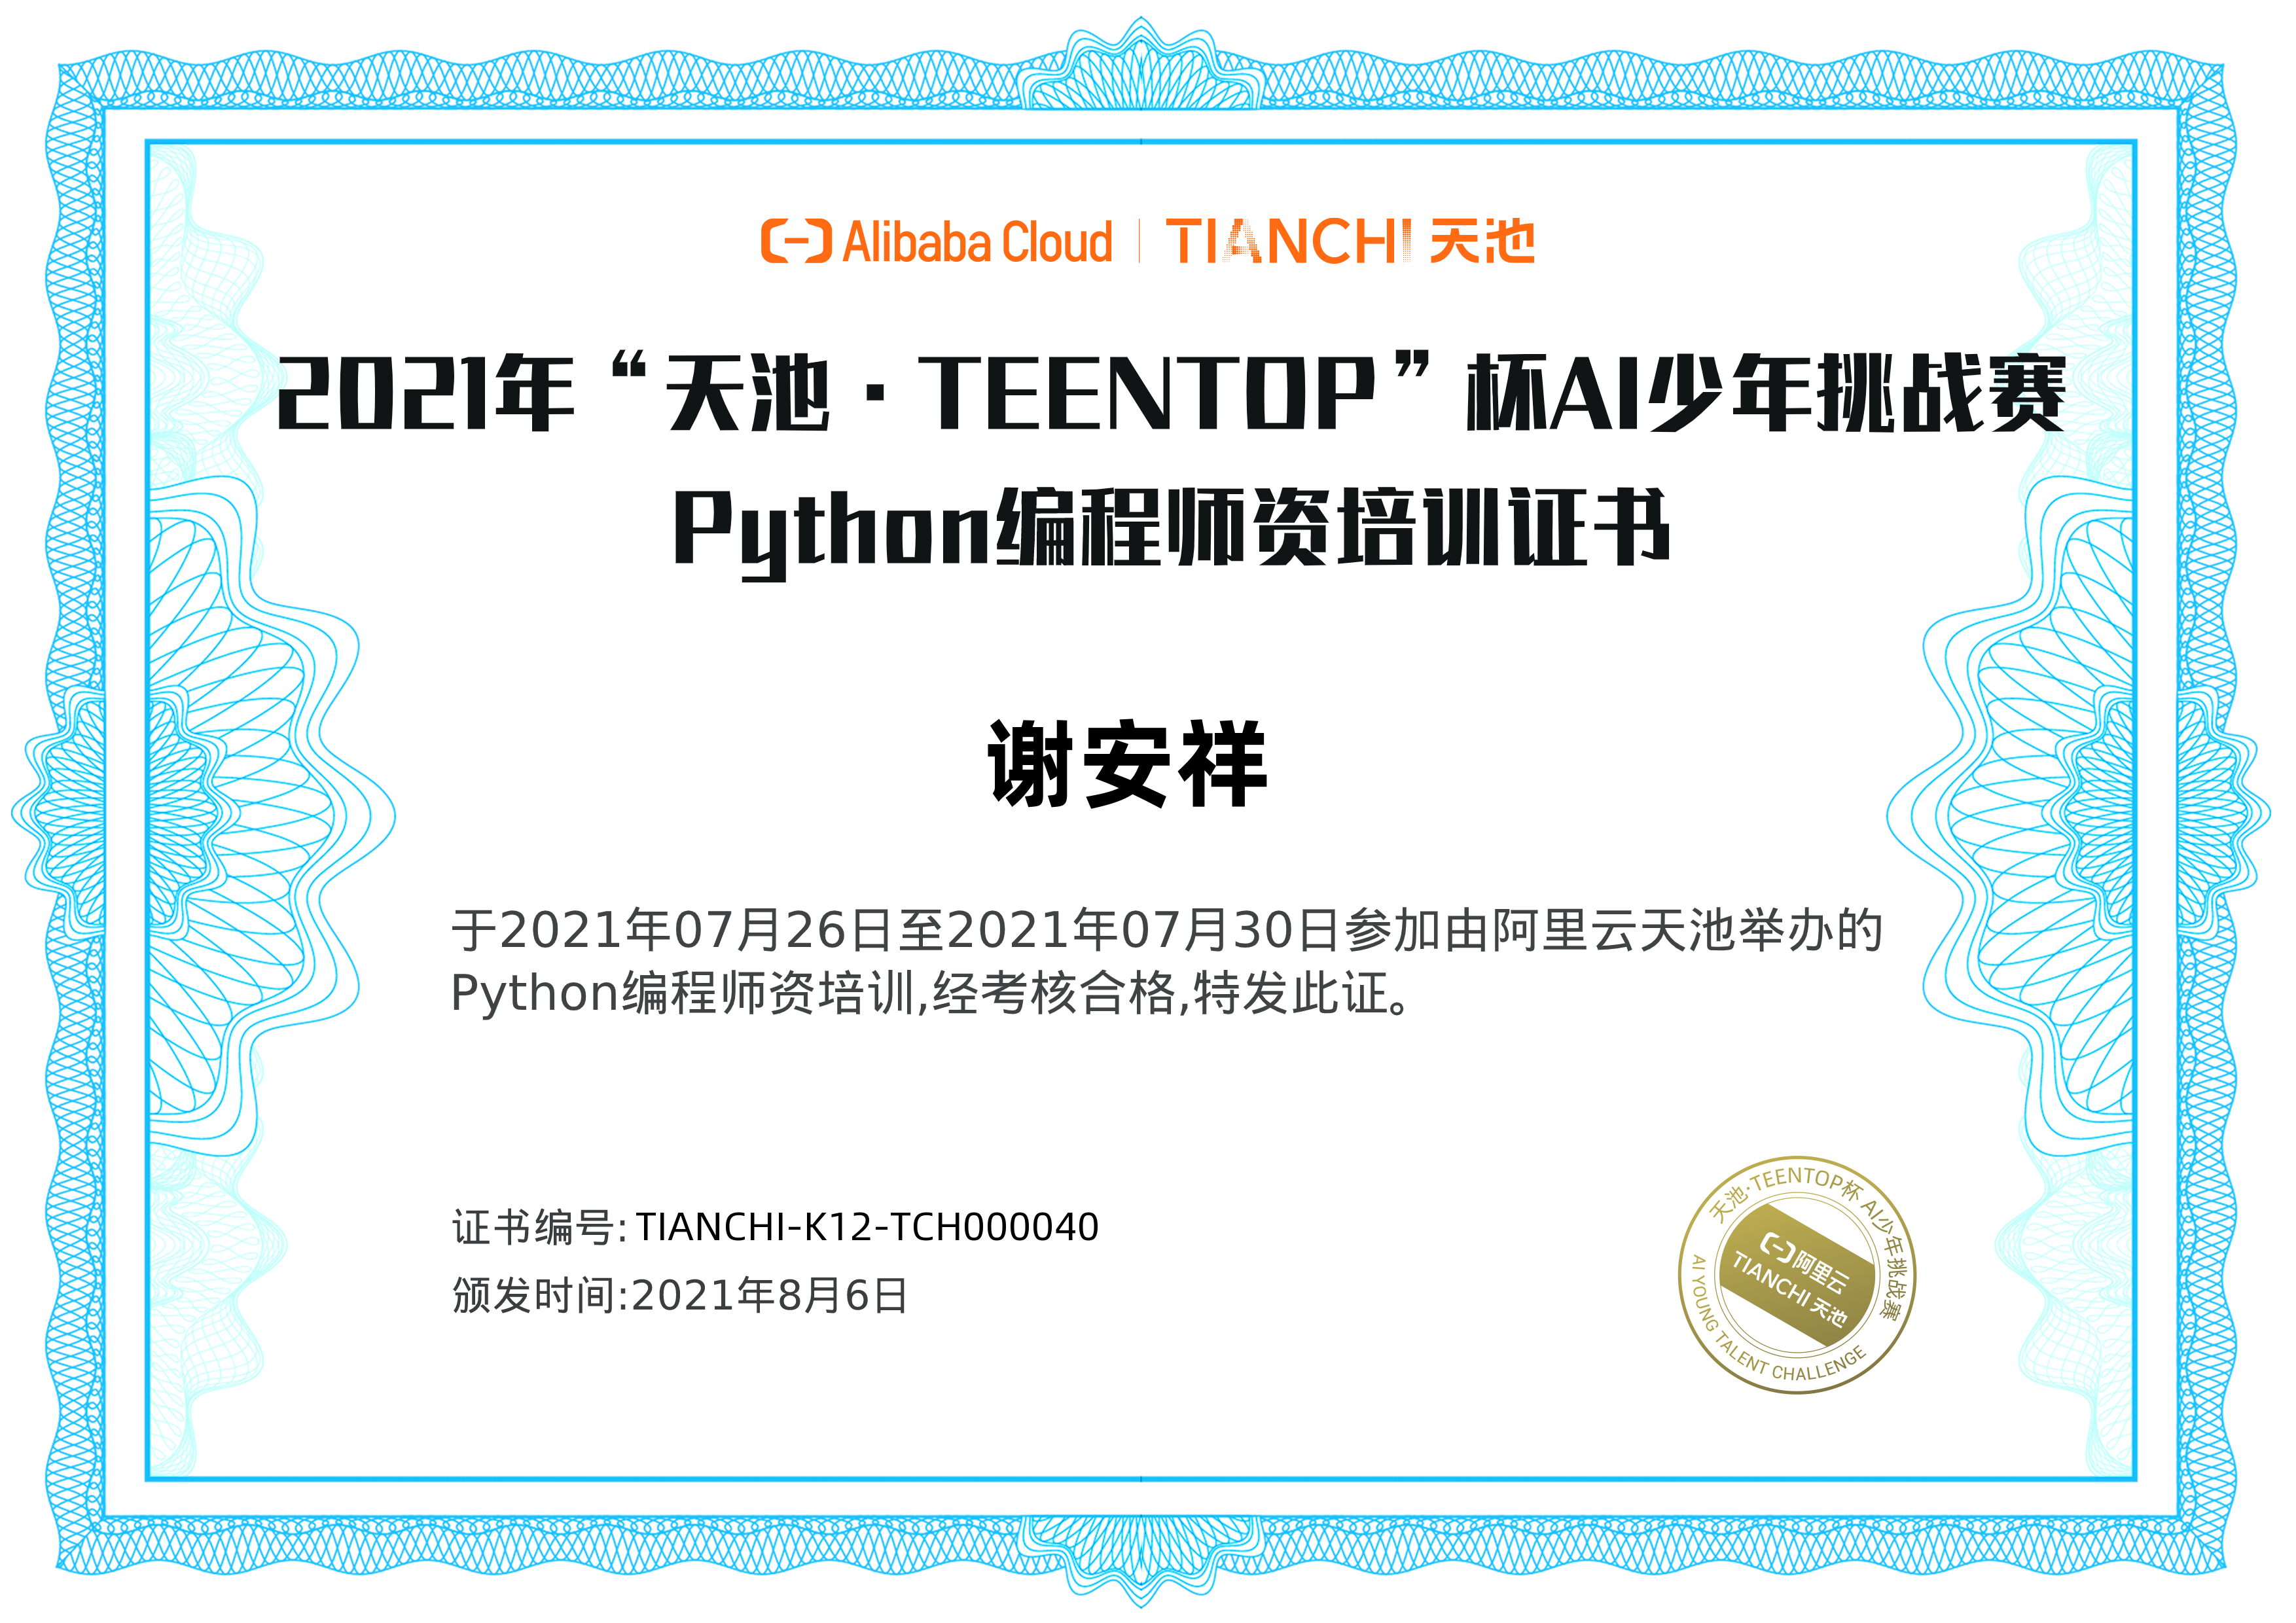 TIANCHI-K12Python证书.png